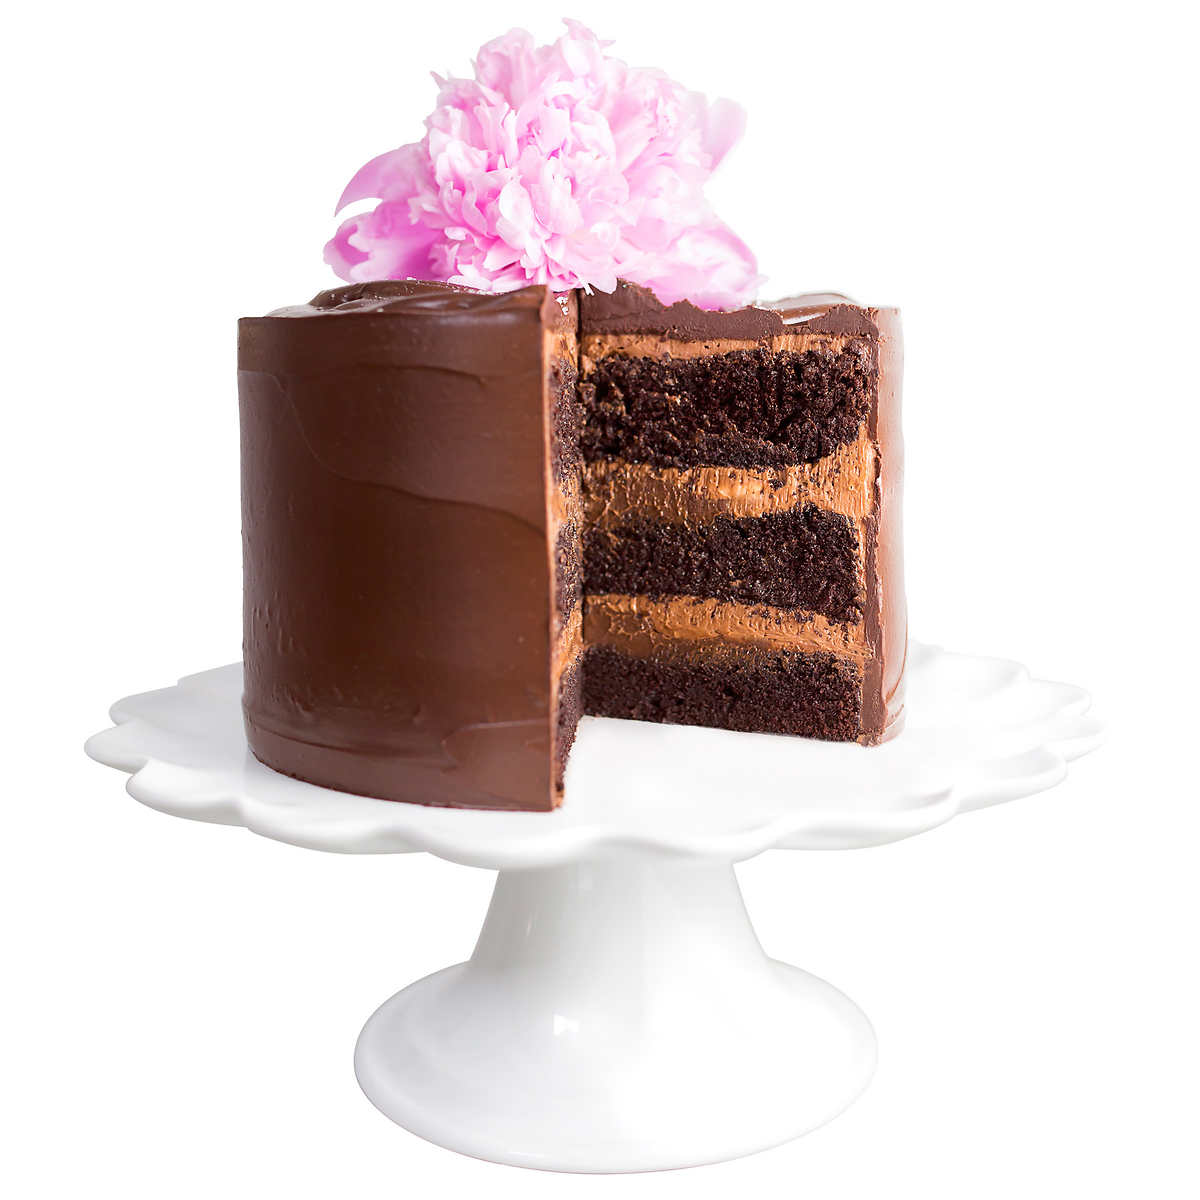 The Cake Bake Shop 8 Round Chocolate Cake (16-22 Servings)